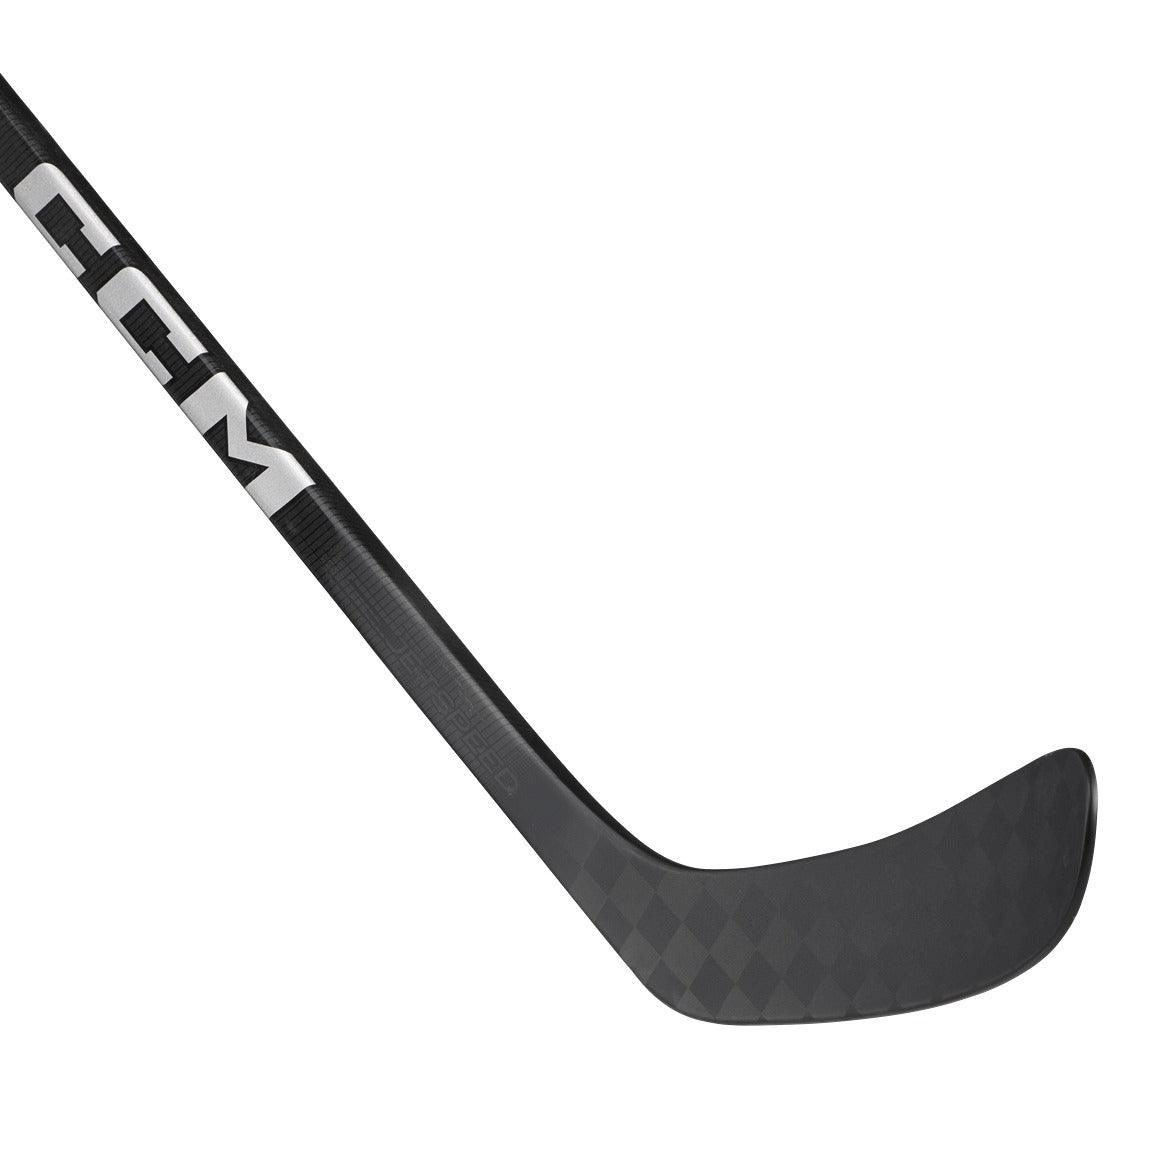 CCM Jetspeed FT670 Hockey Stick - Intermediate